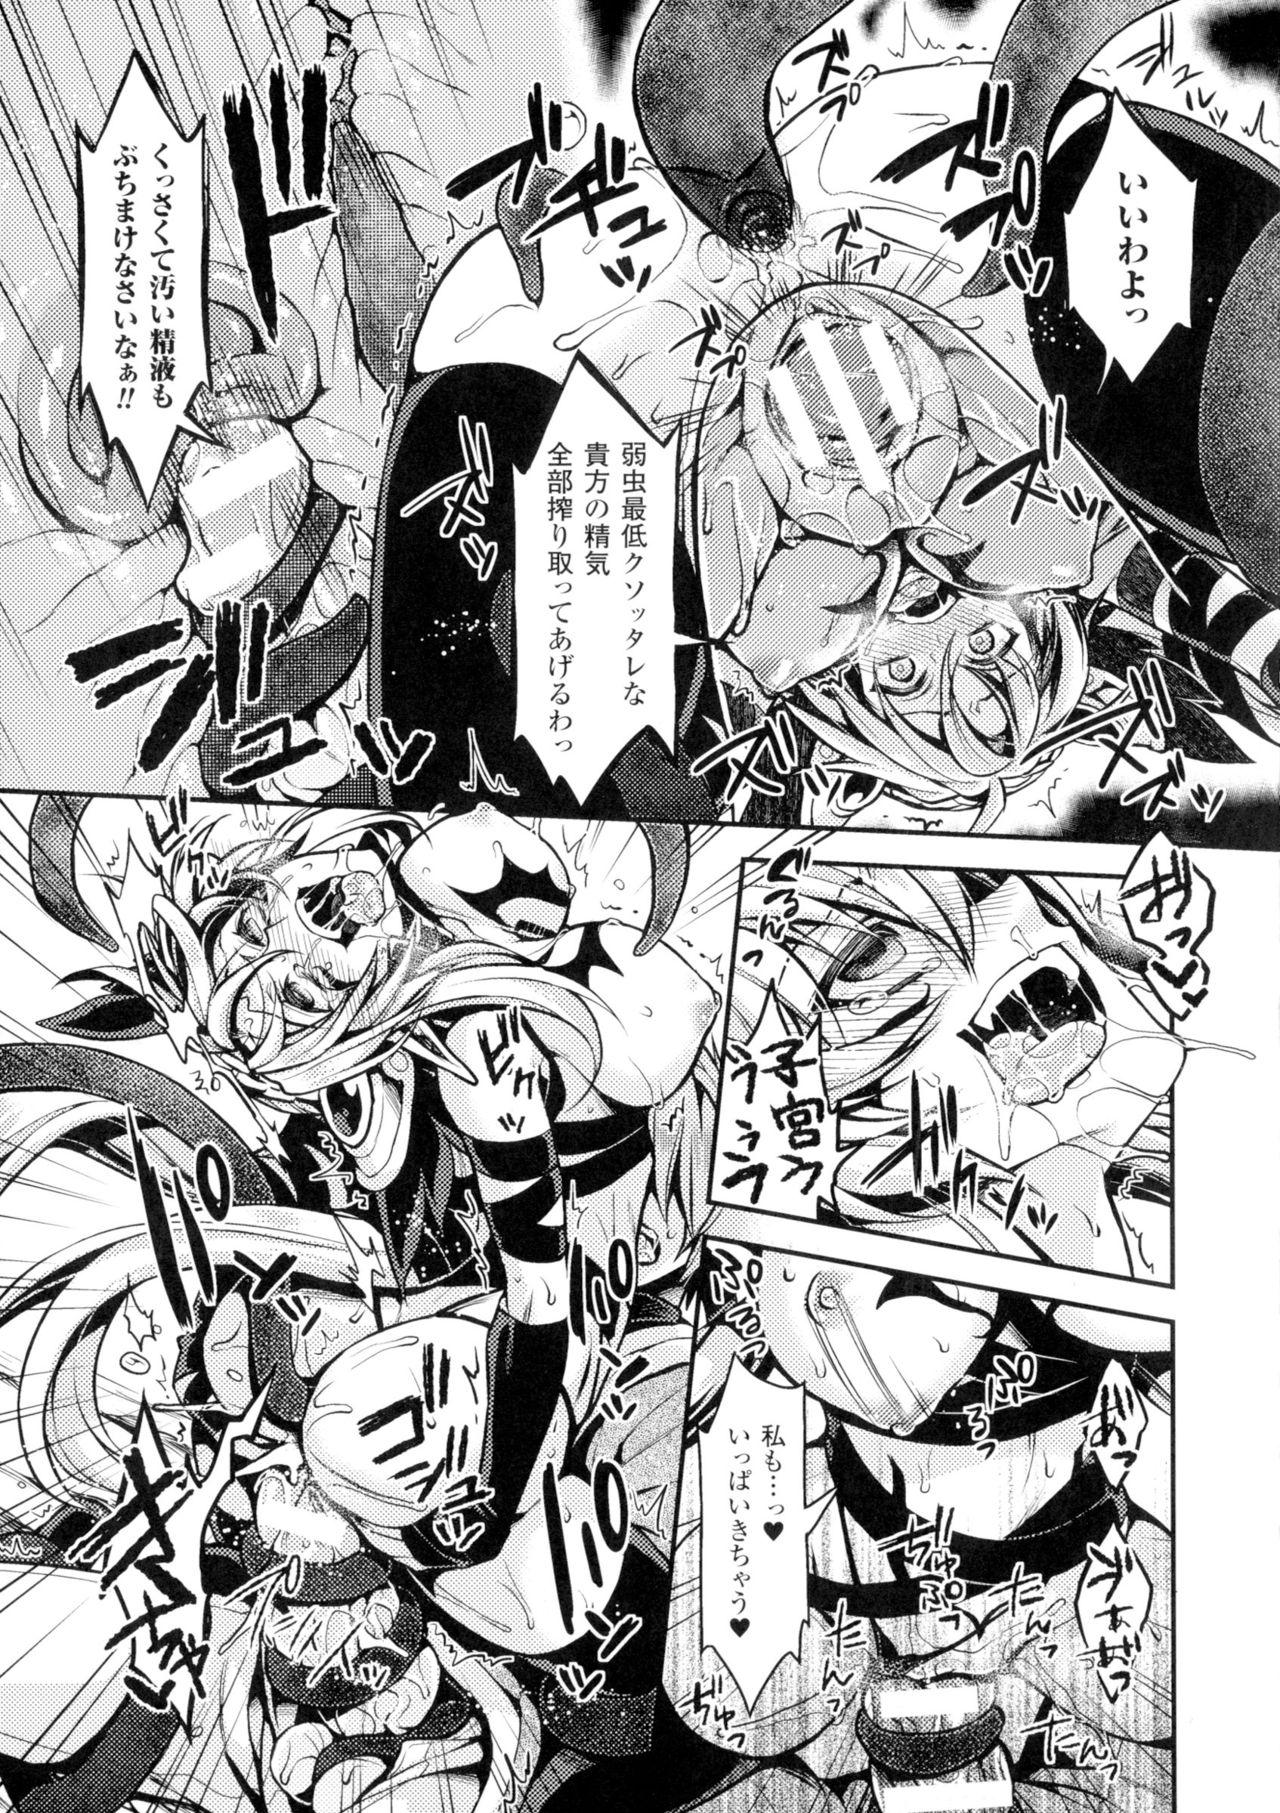 Seigi no Heroine Kangoku File DX Vol. 2 46